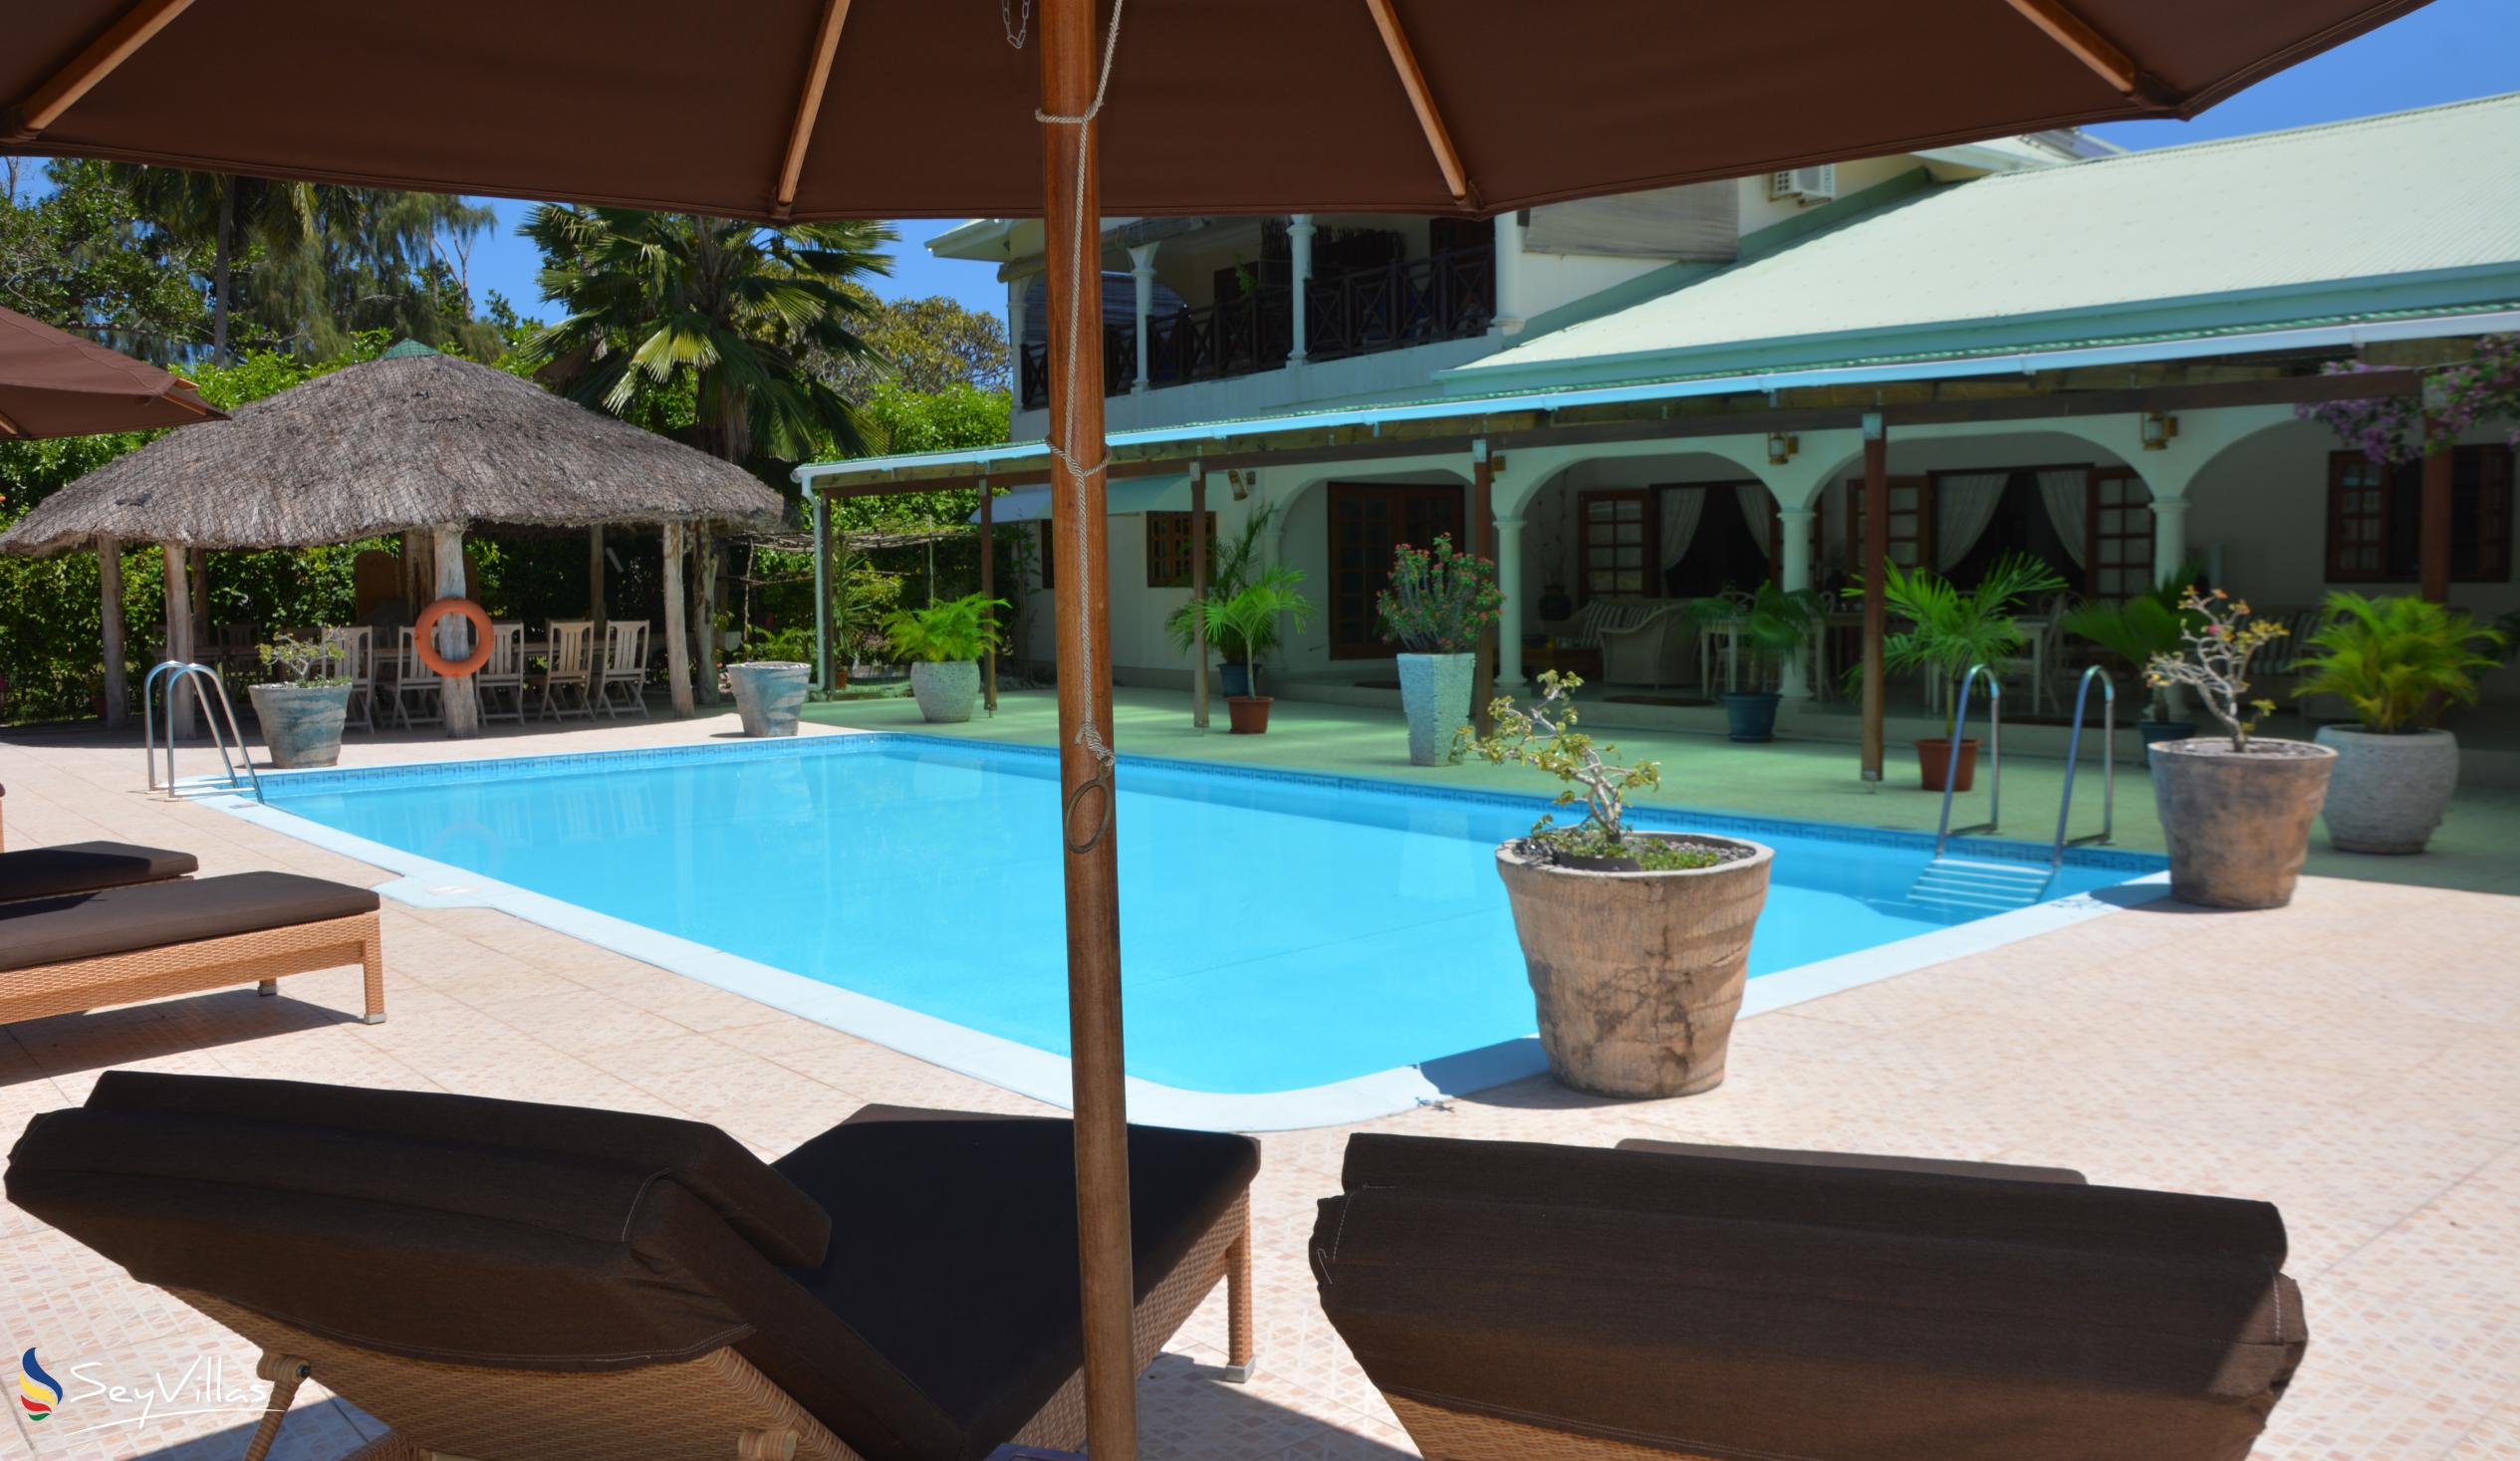 Photo 8: Villa de Cerf - Outdoor area - Cerf Island (Seychelles)